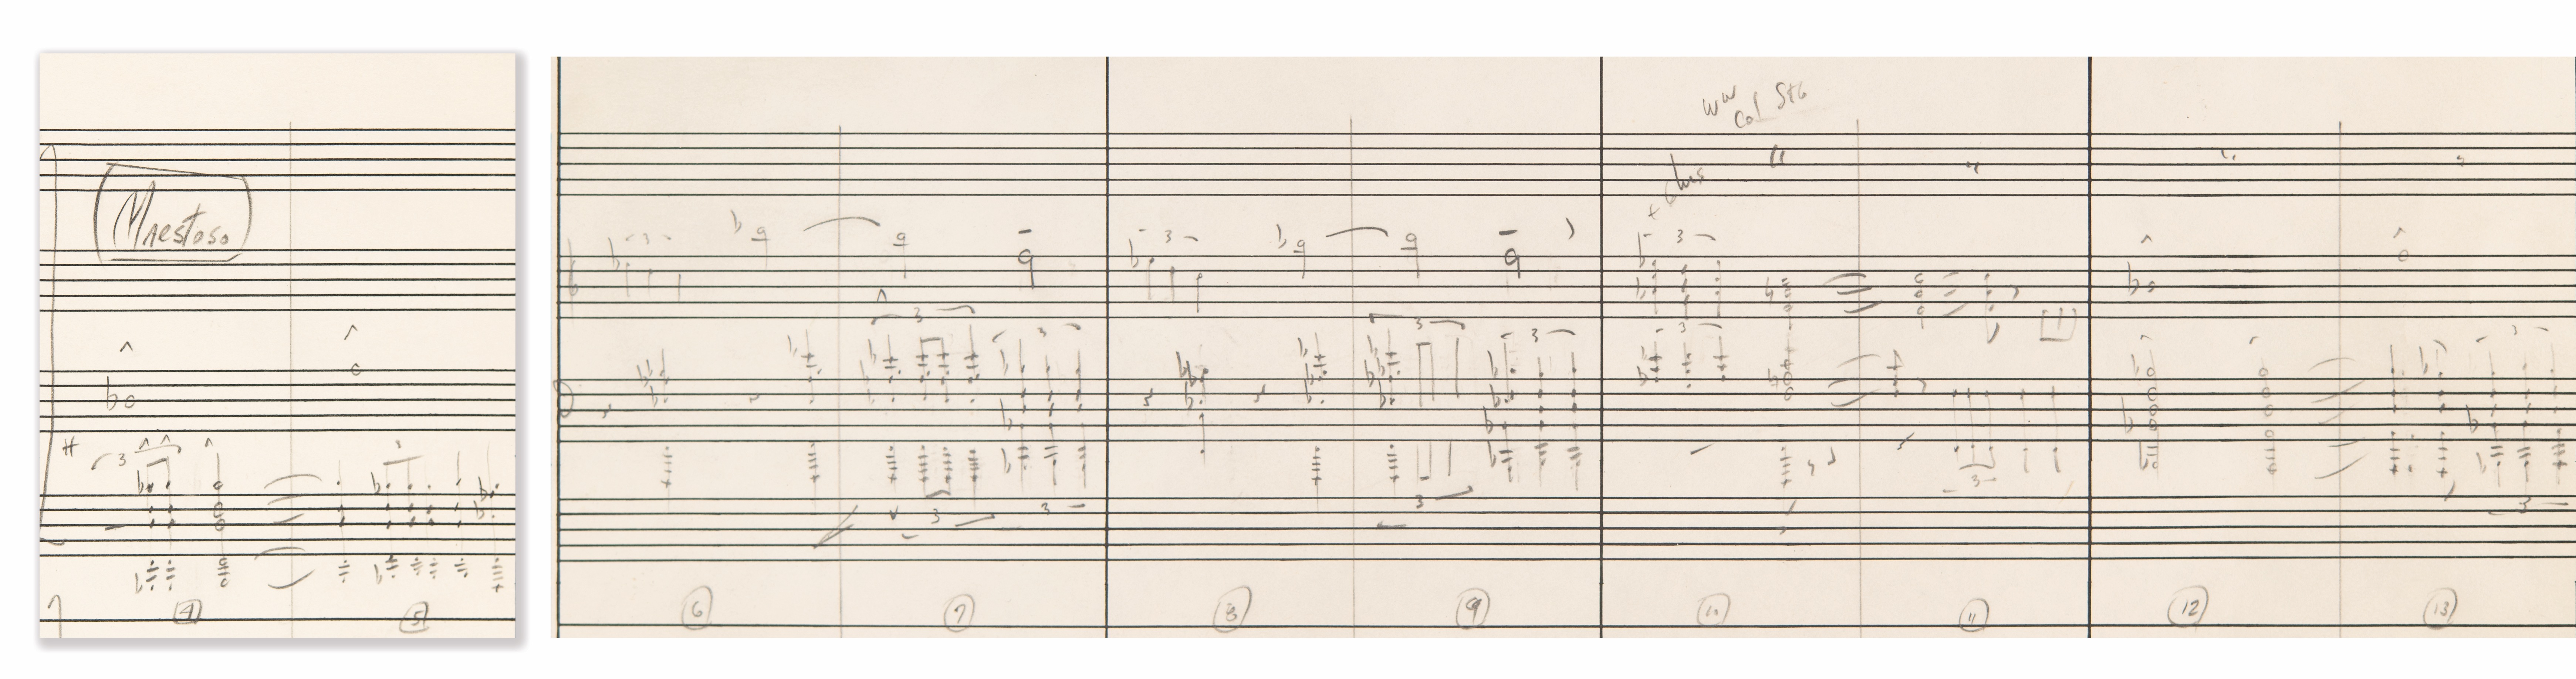 Lot #4046 Star Wars: John Williams Original Handwritten Music Manuscript for the Opening 'Star Wars Main Title' Theme - Image 5